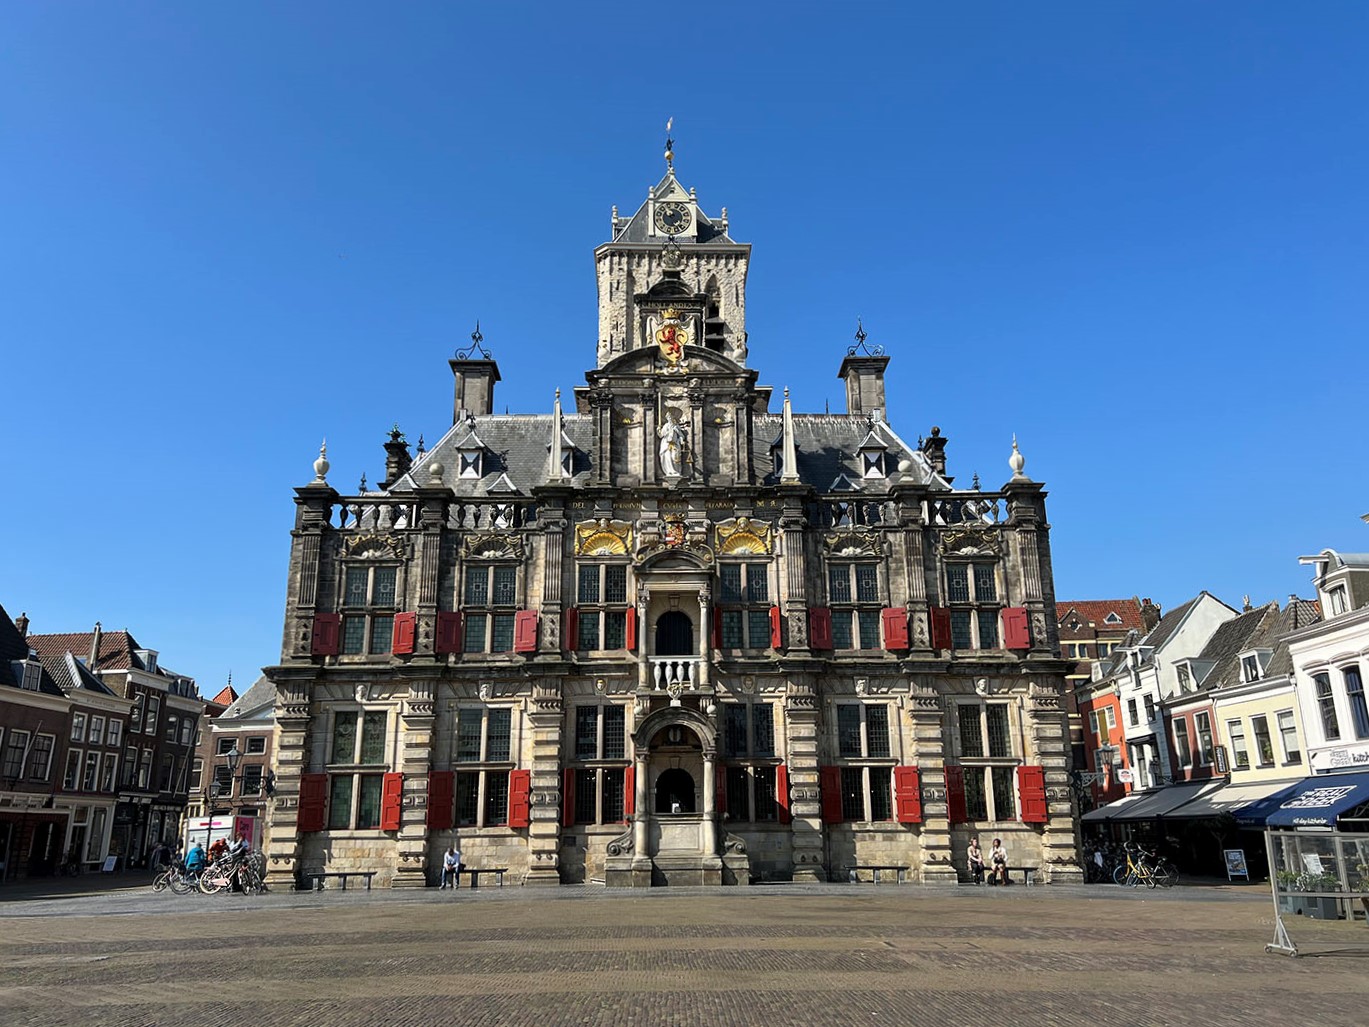 Delft's City Hall. Credit: Carolina Valenzuela